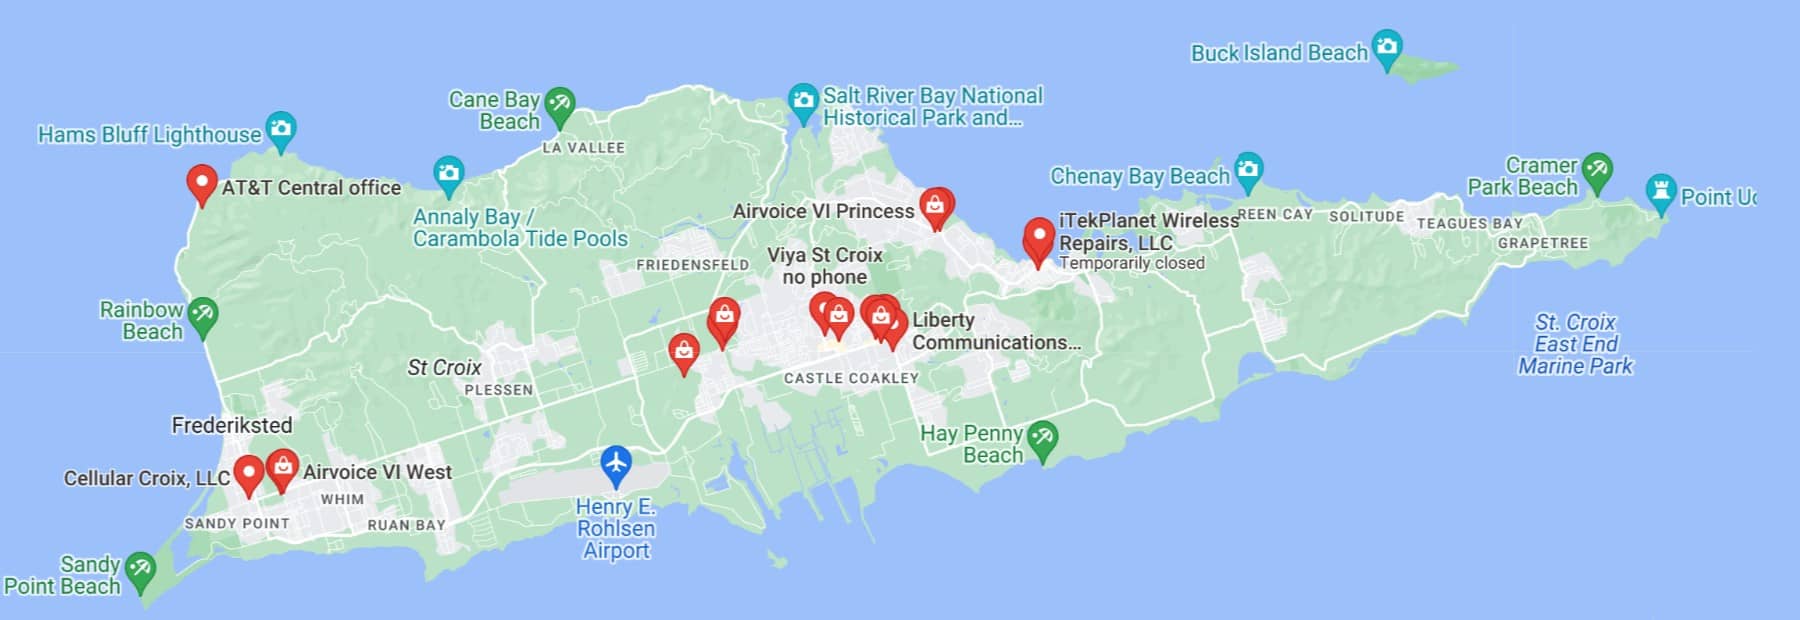 Mobile phone companies in St Croix USVI cellular operators data providers Virgin Islands& 